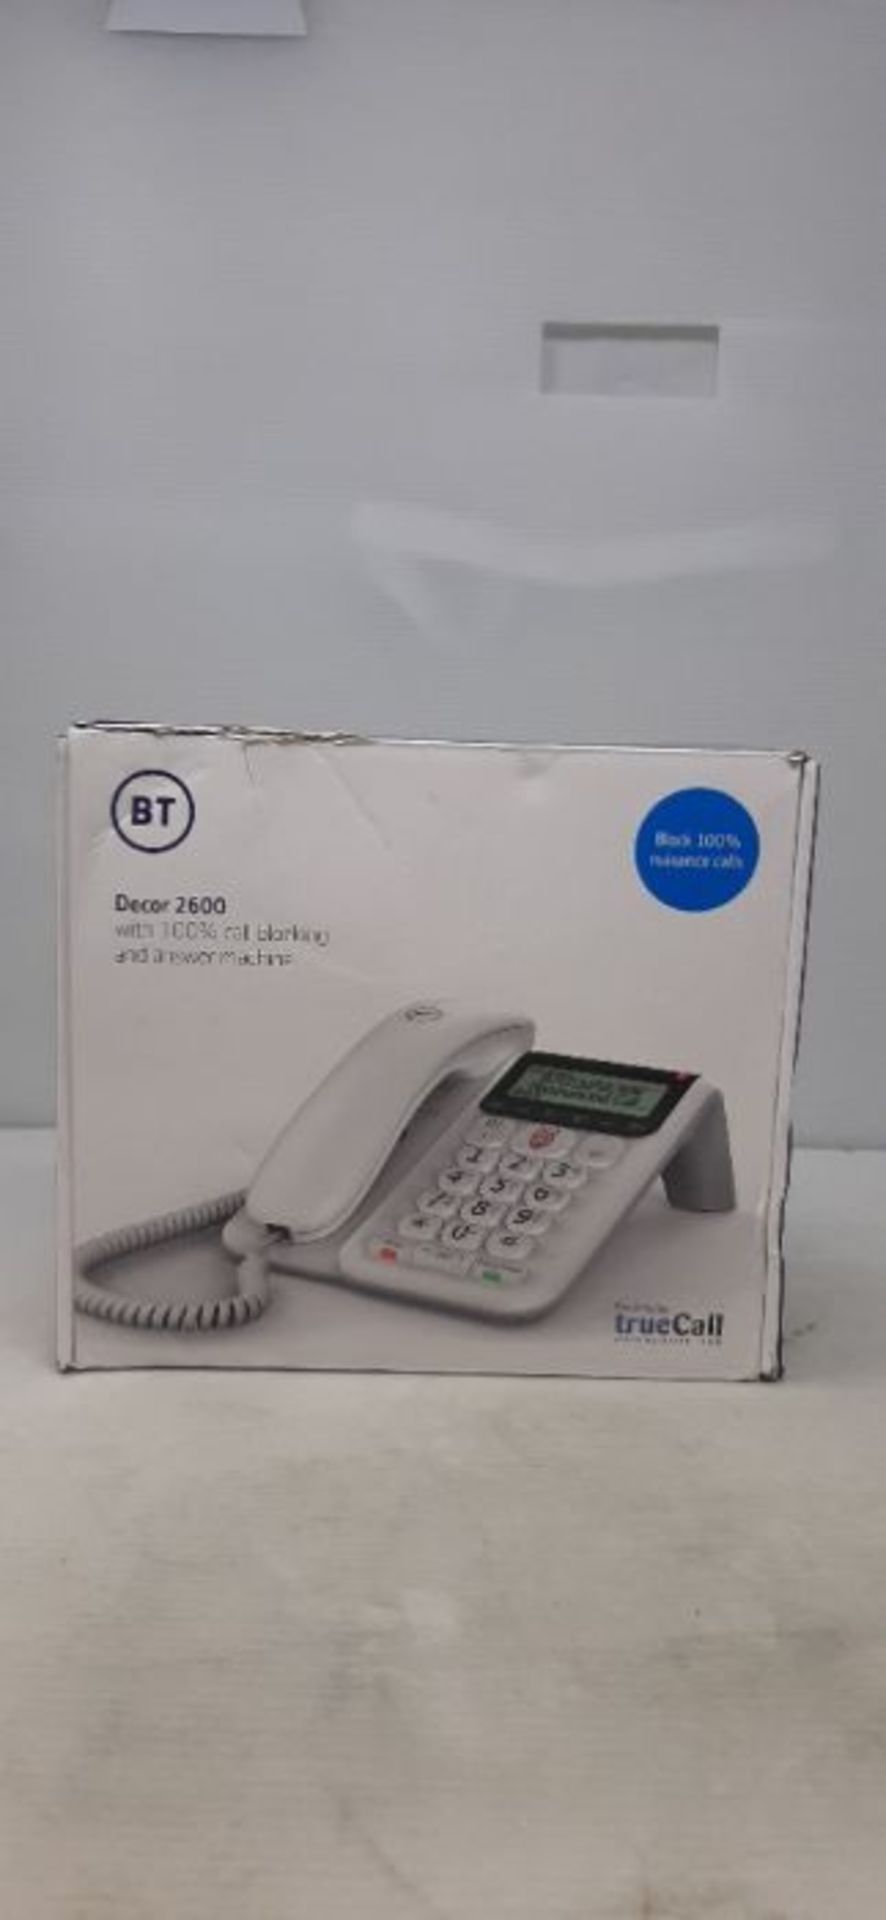 BT Decor Advanced Call Blocker Corded Telephone, White - Image 2 of 3